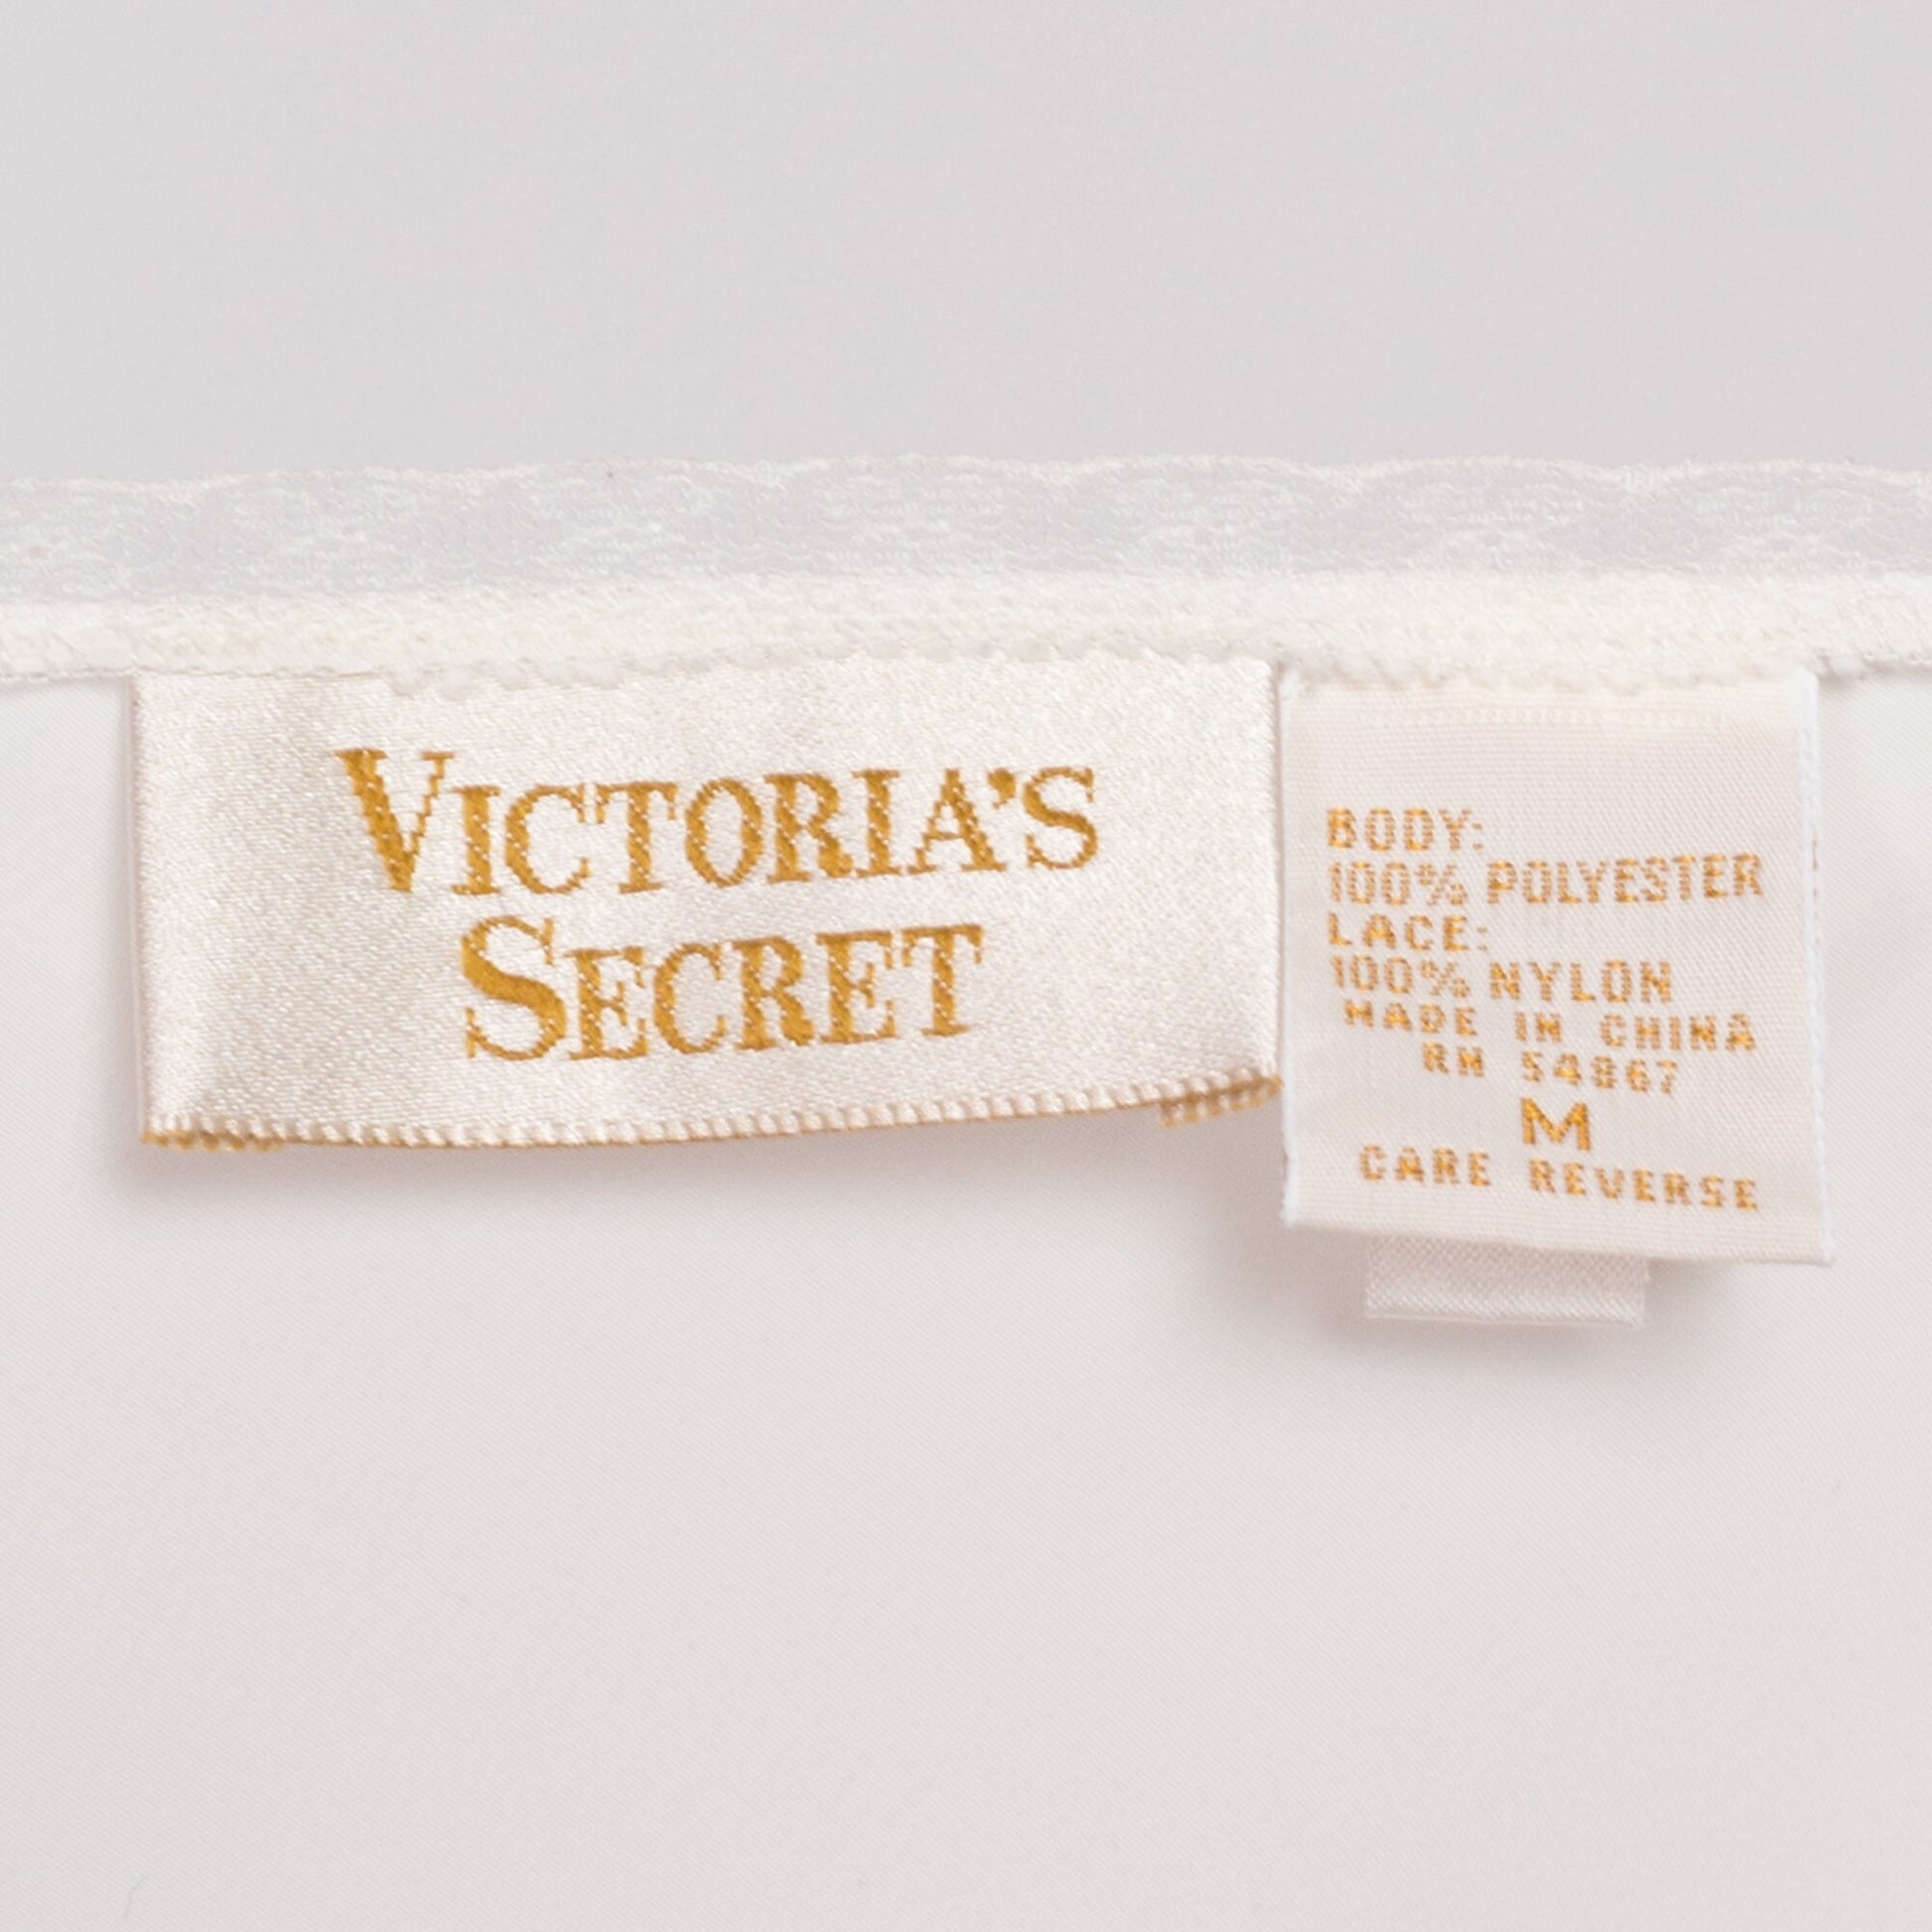 Vintage Victoria's Secret White Lace Trim Lingerie Romper - Medium